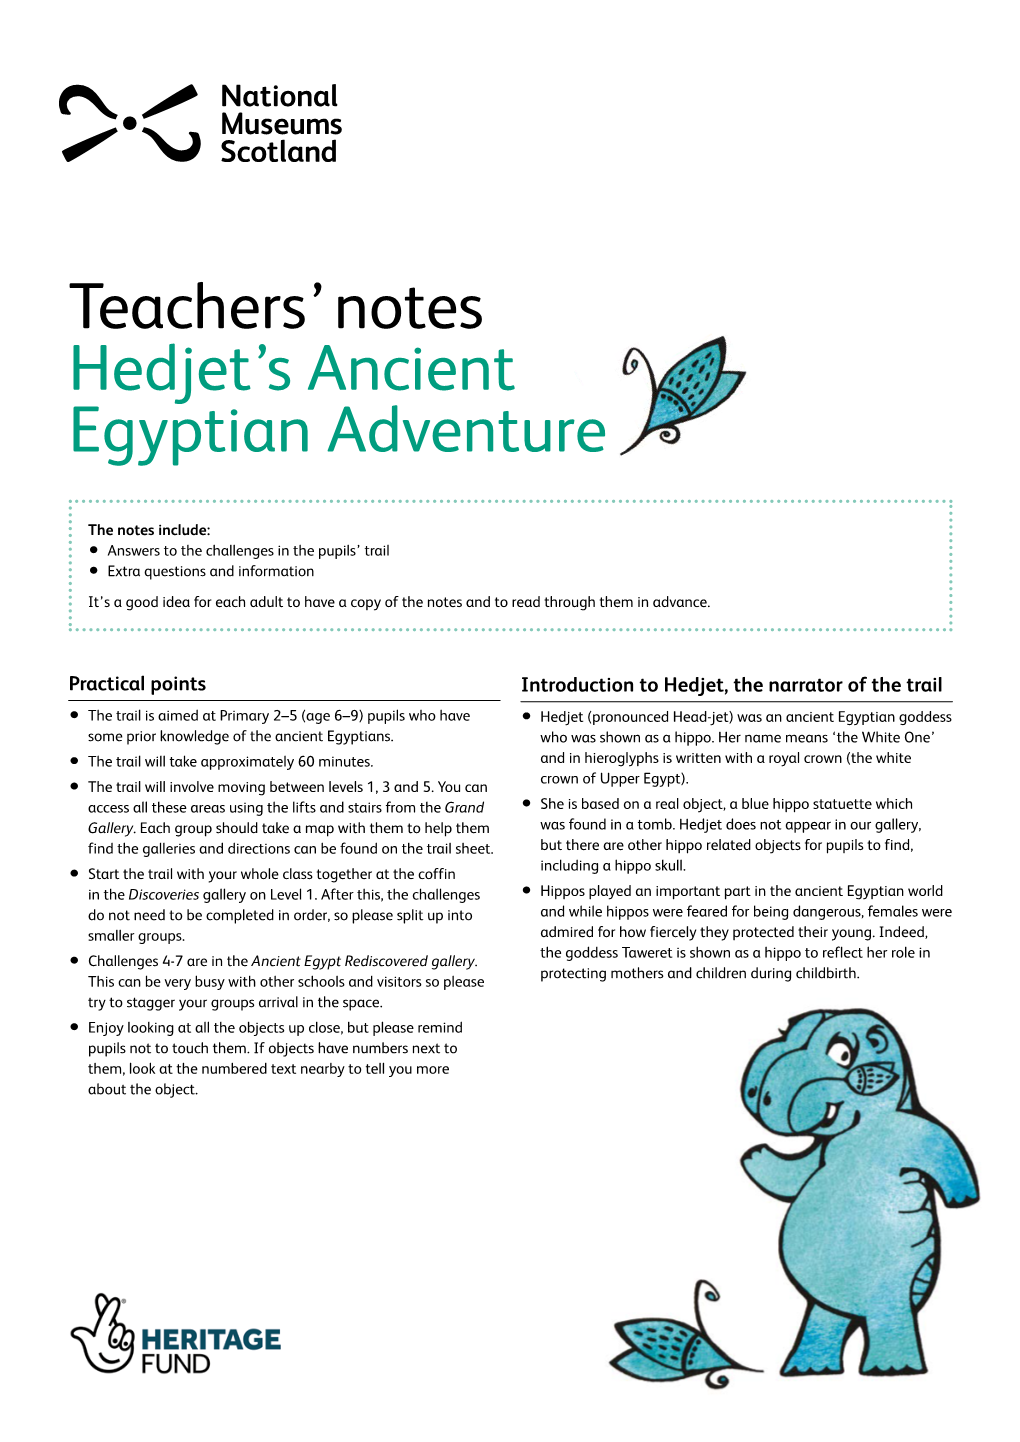 Teachers' Notes Hedjet's Ancient Egyptian Adventure